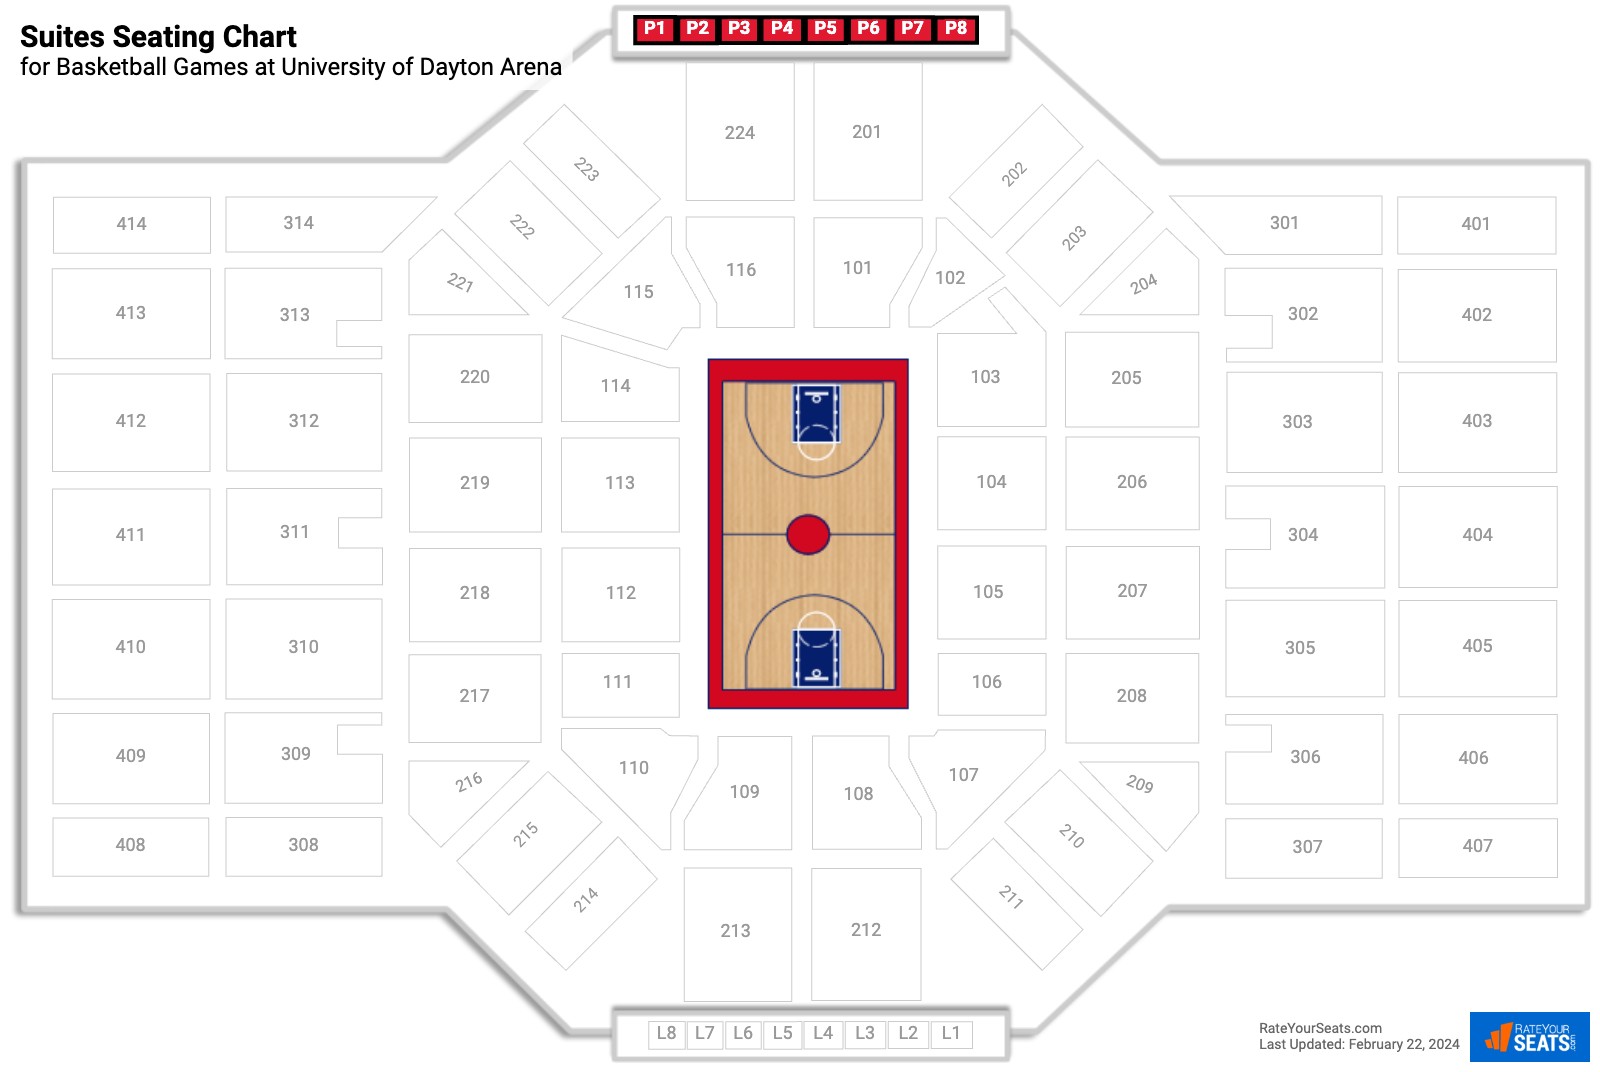 Basketball Suites Seating Chart at University of Dayton Arena